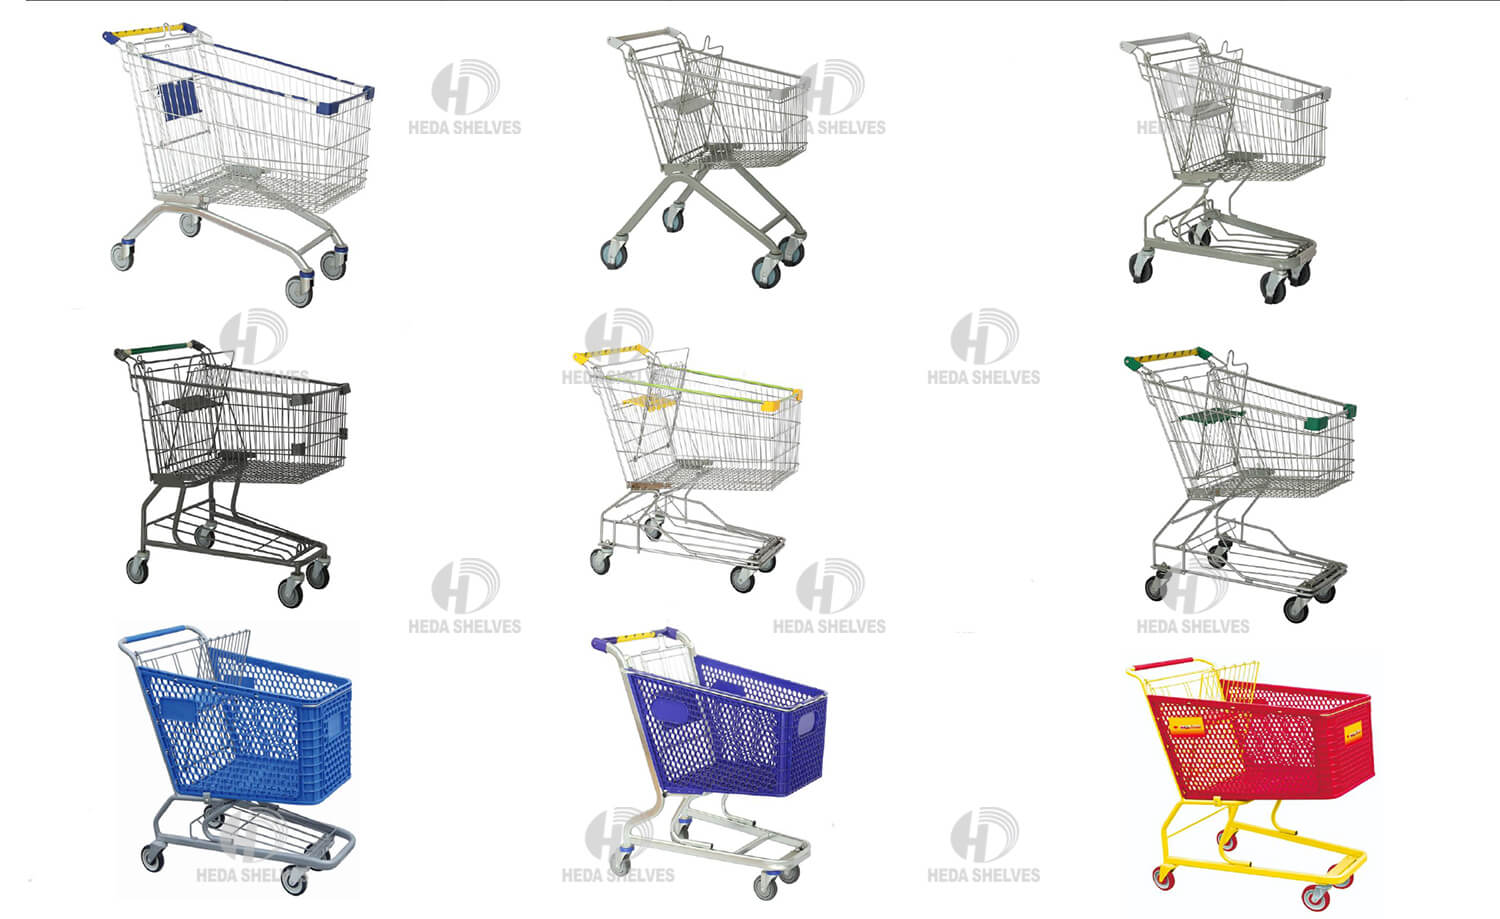 Supermarket Shopping Cart,grocery shopping cart,shopping trolley,grocery cart,convenience store cart,chrome matel shopping cart,plastic shopping cart